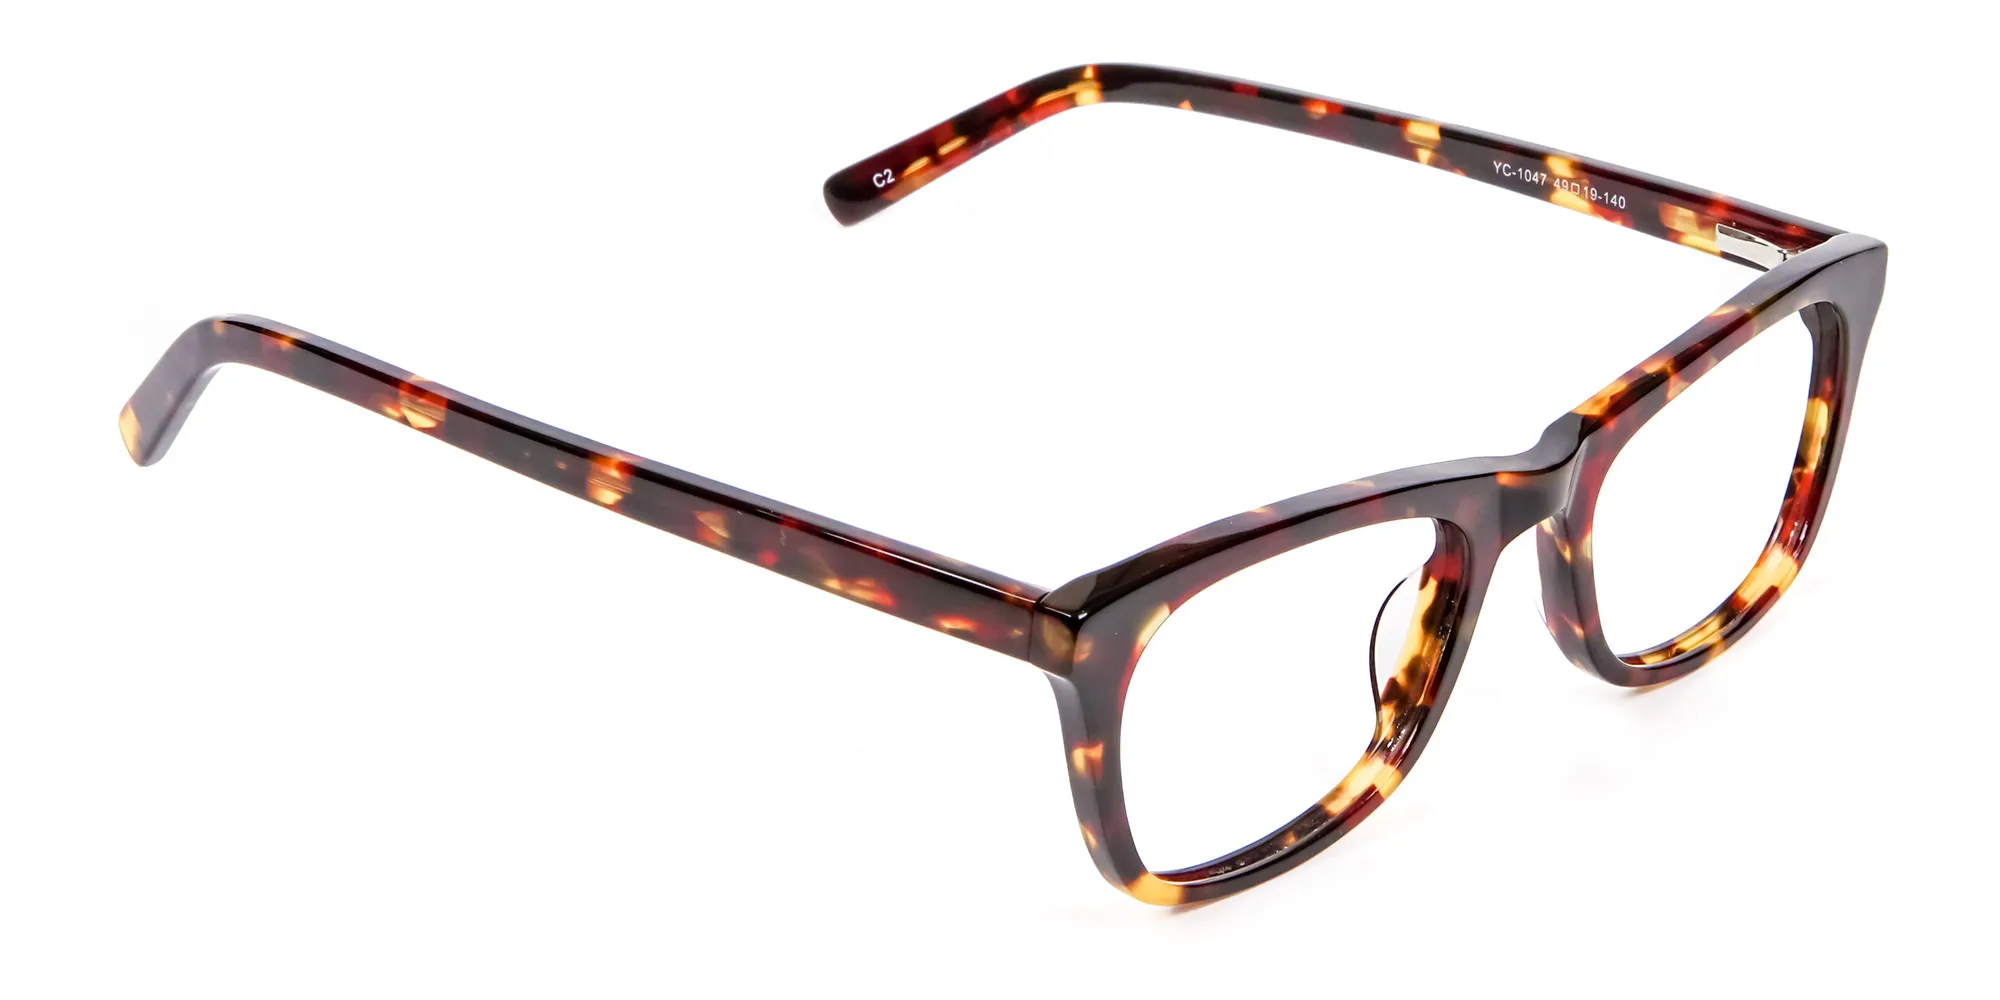 Warm-toned Tortoiseshell Glasses in Cat Eye Style - 1